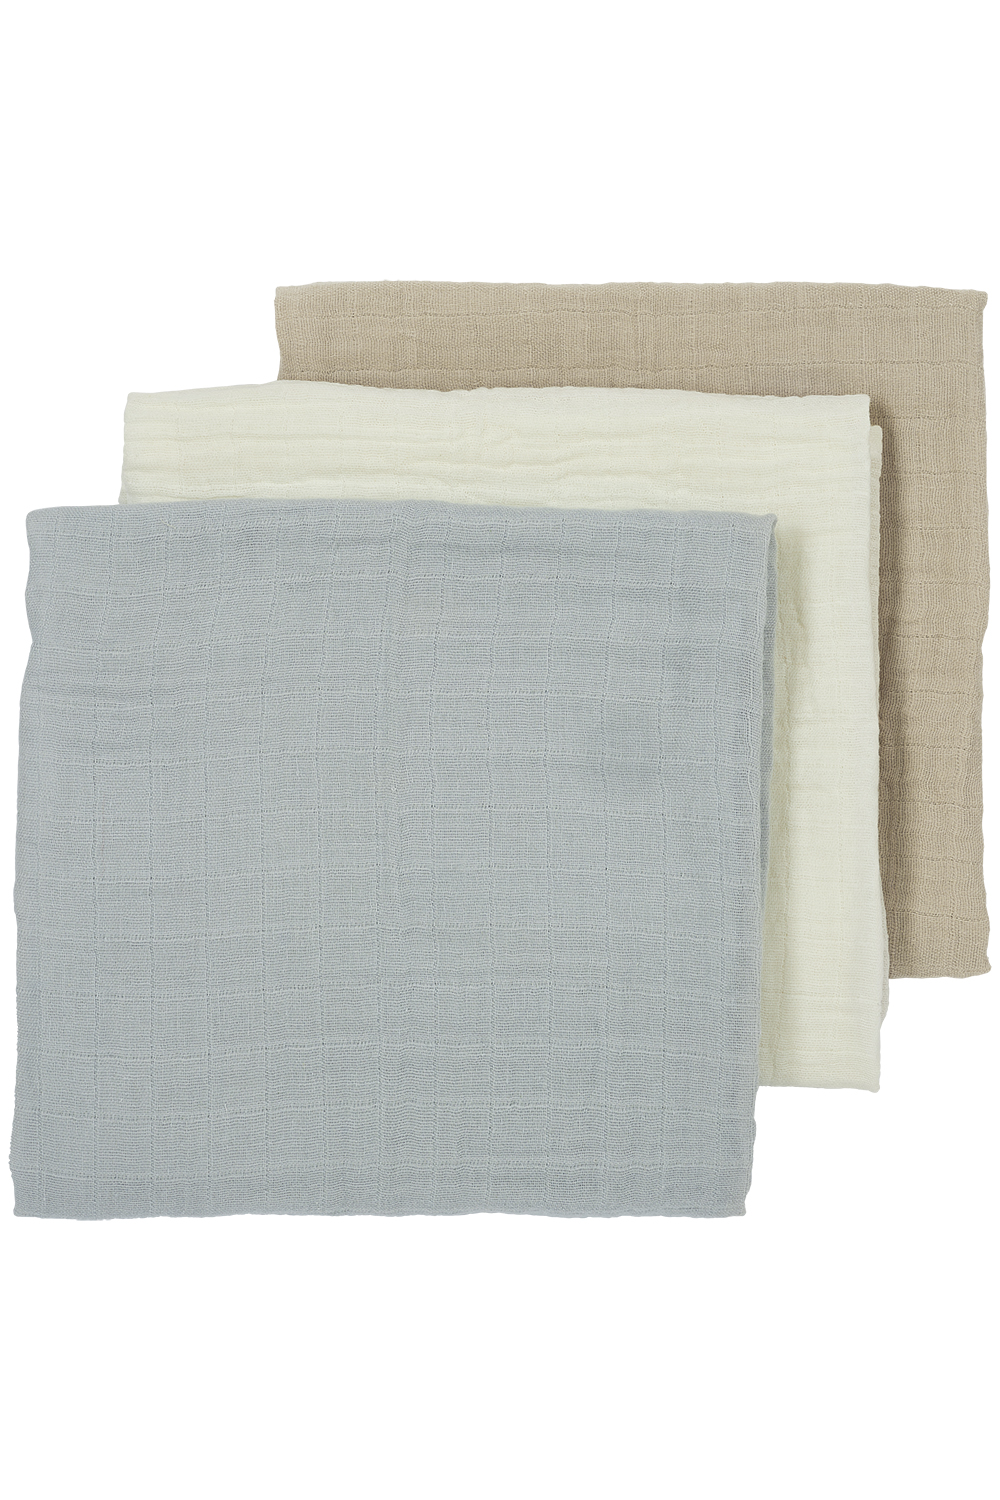 Muslin squares 3-pack Uni - offwhite/light grey/sand - 70x70cm